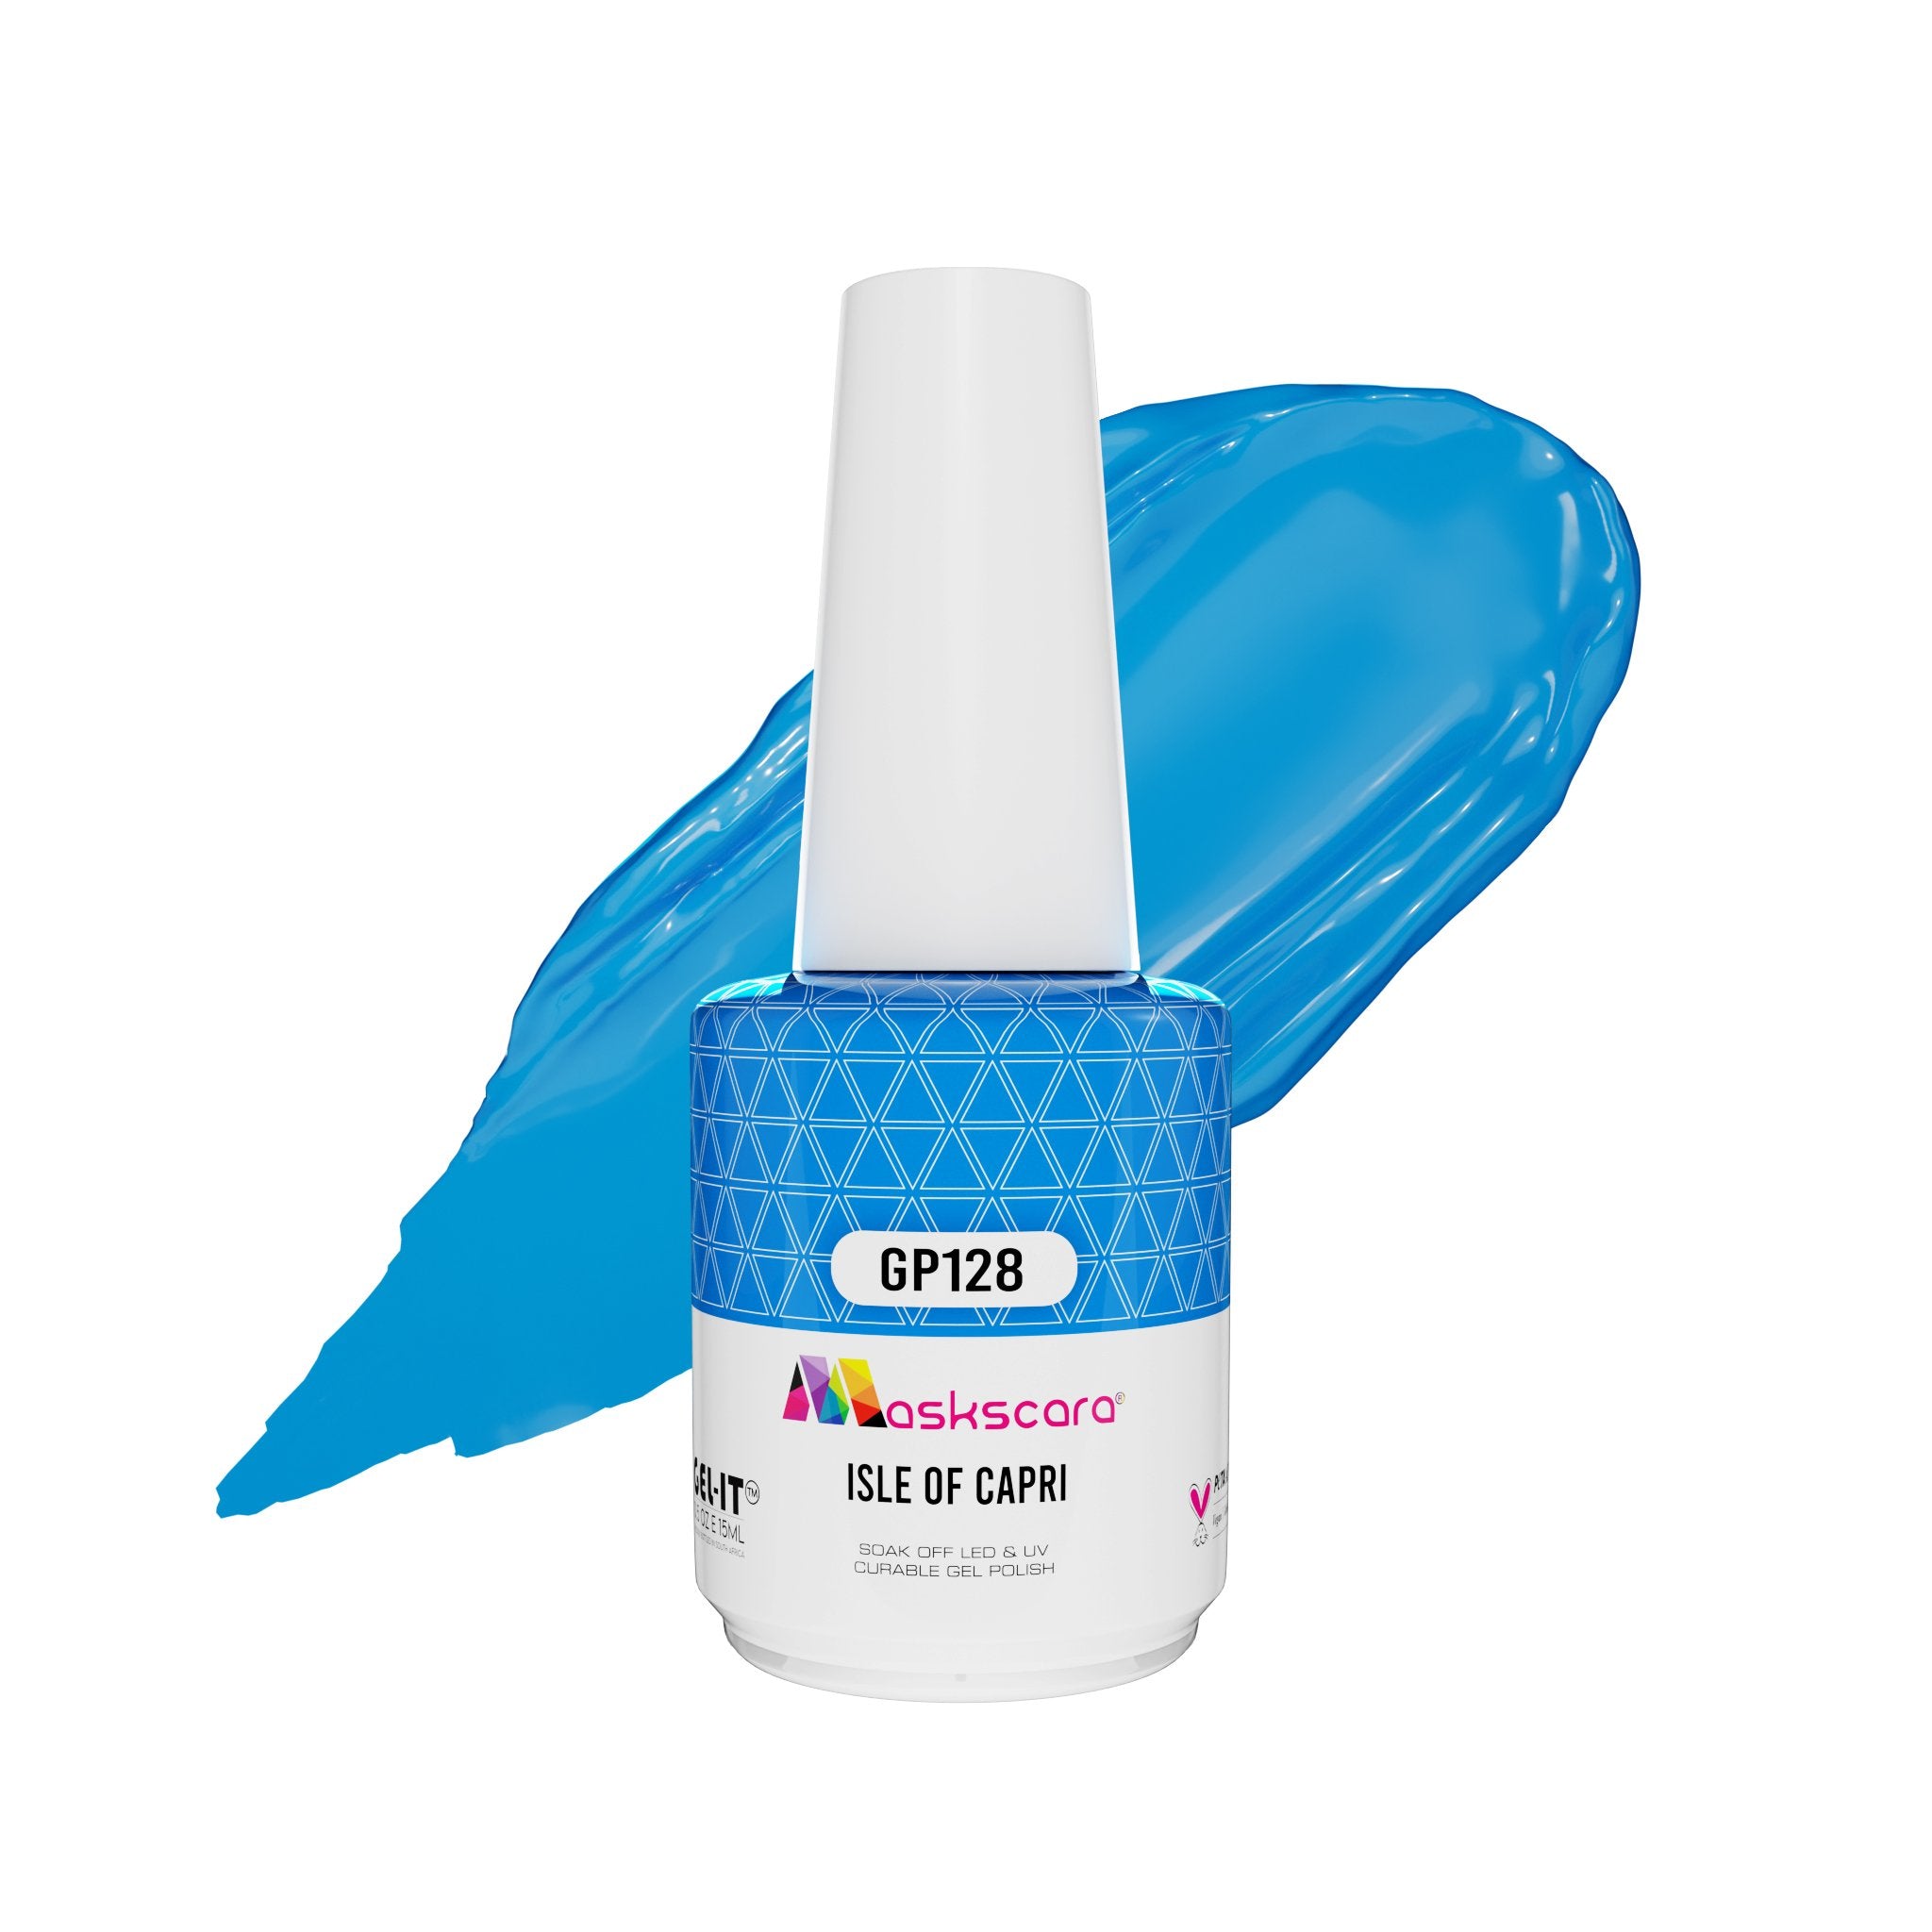 <img scr = “ GP128 Isle Of Capri.jpeg” alt = “True Blue gel polish colour by the brand Maskscara”>